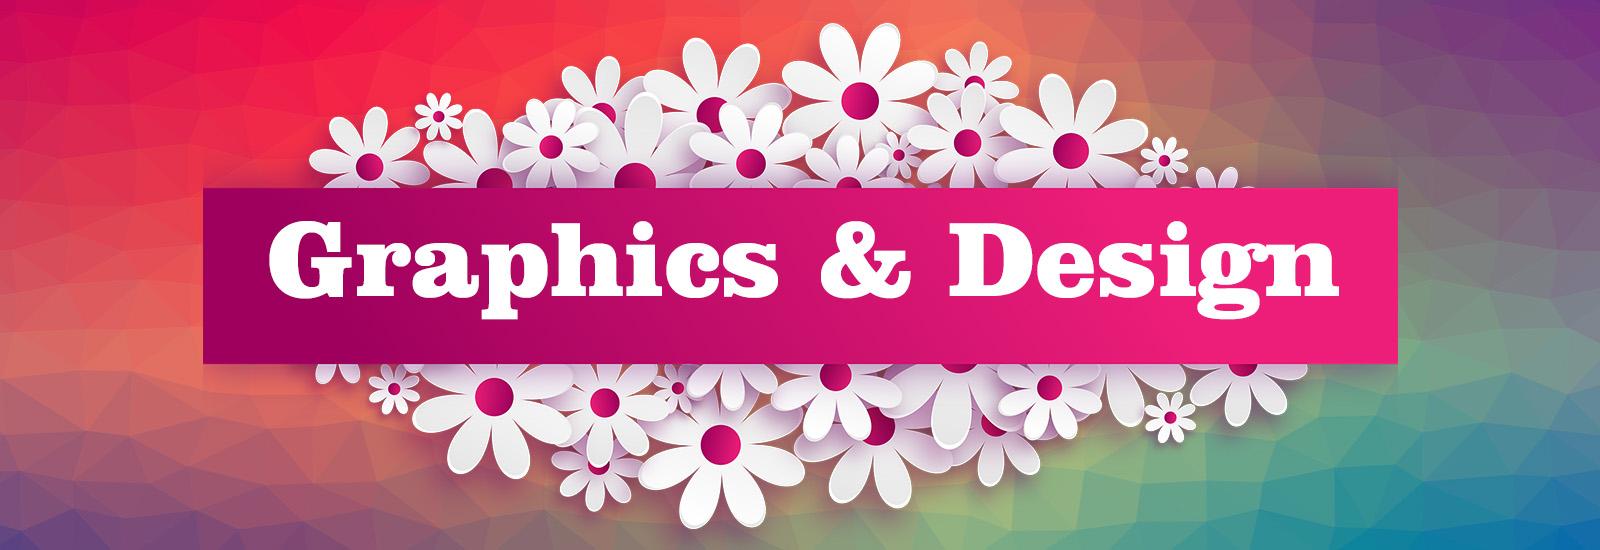 Graphics & Design Banner